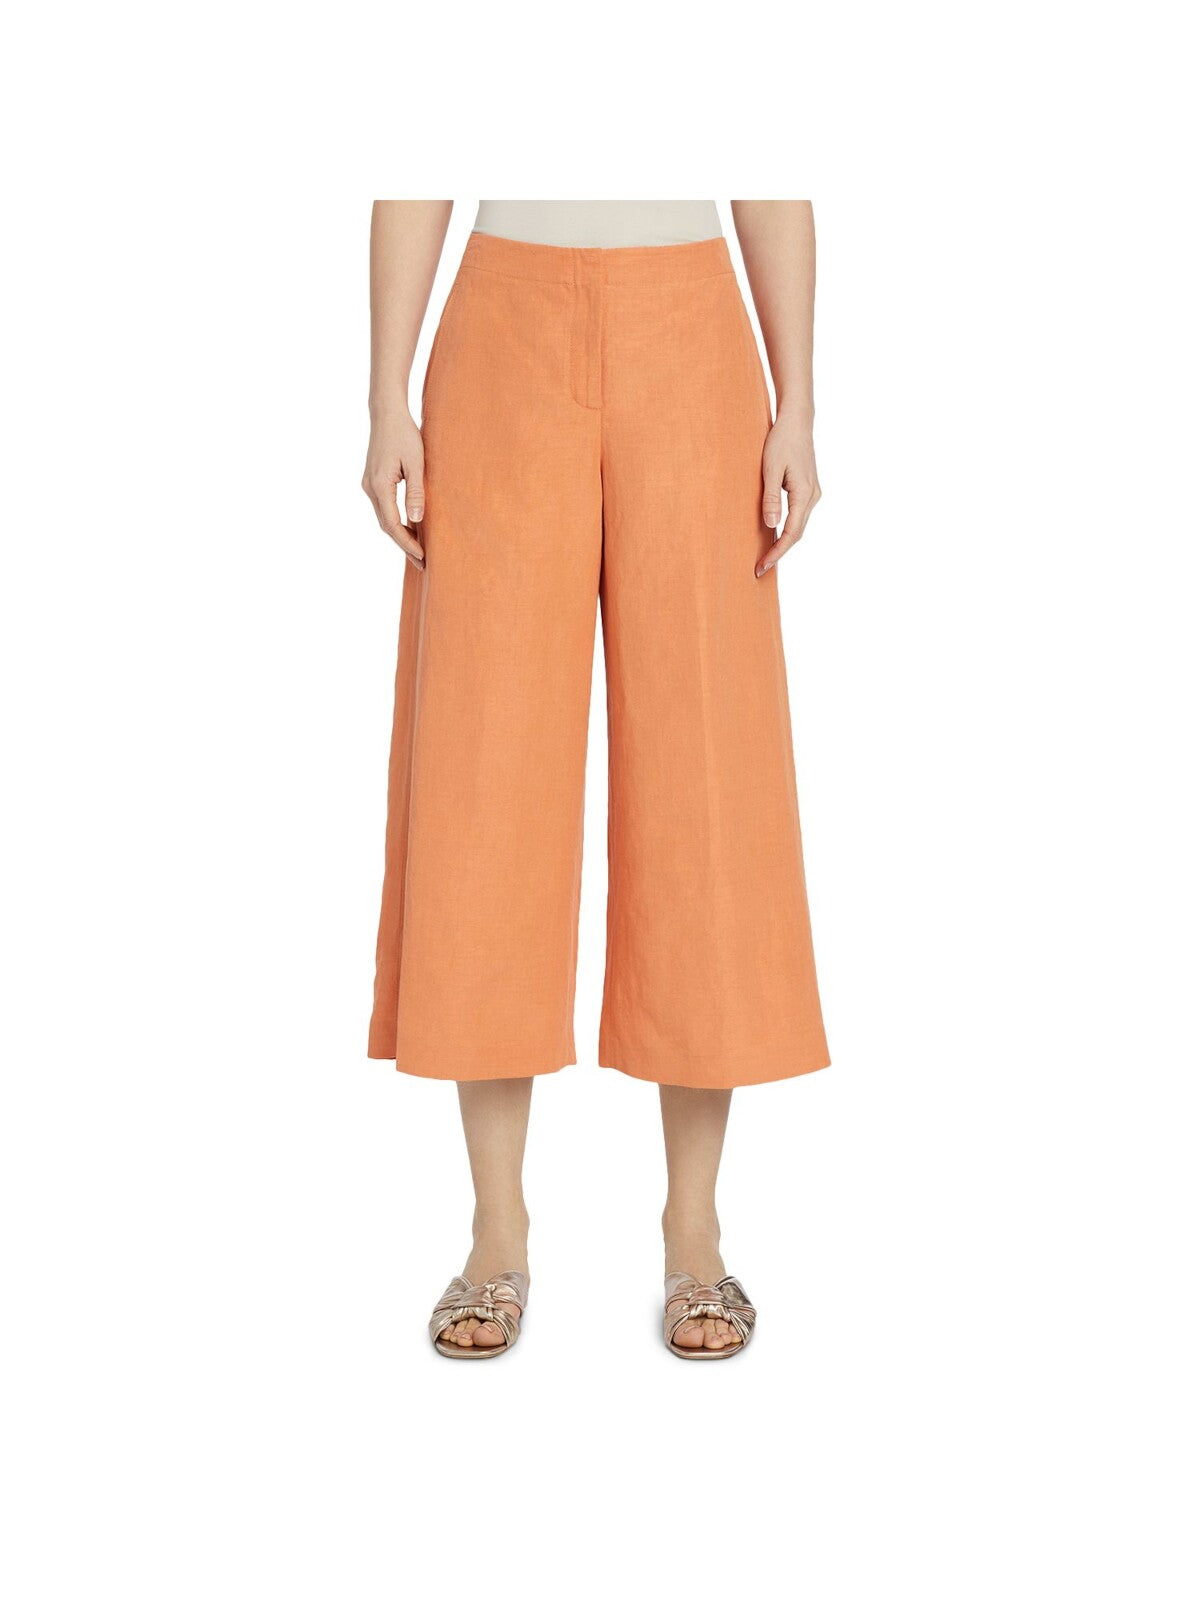 LAFAYETTE 148 Womens Orange Zippered Pocketed Wide Leg Capri High Waist Pants 0